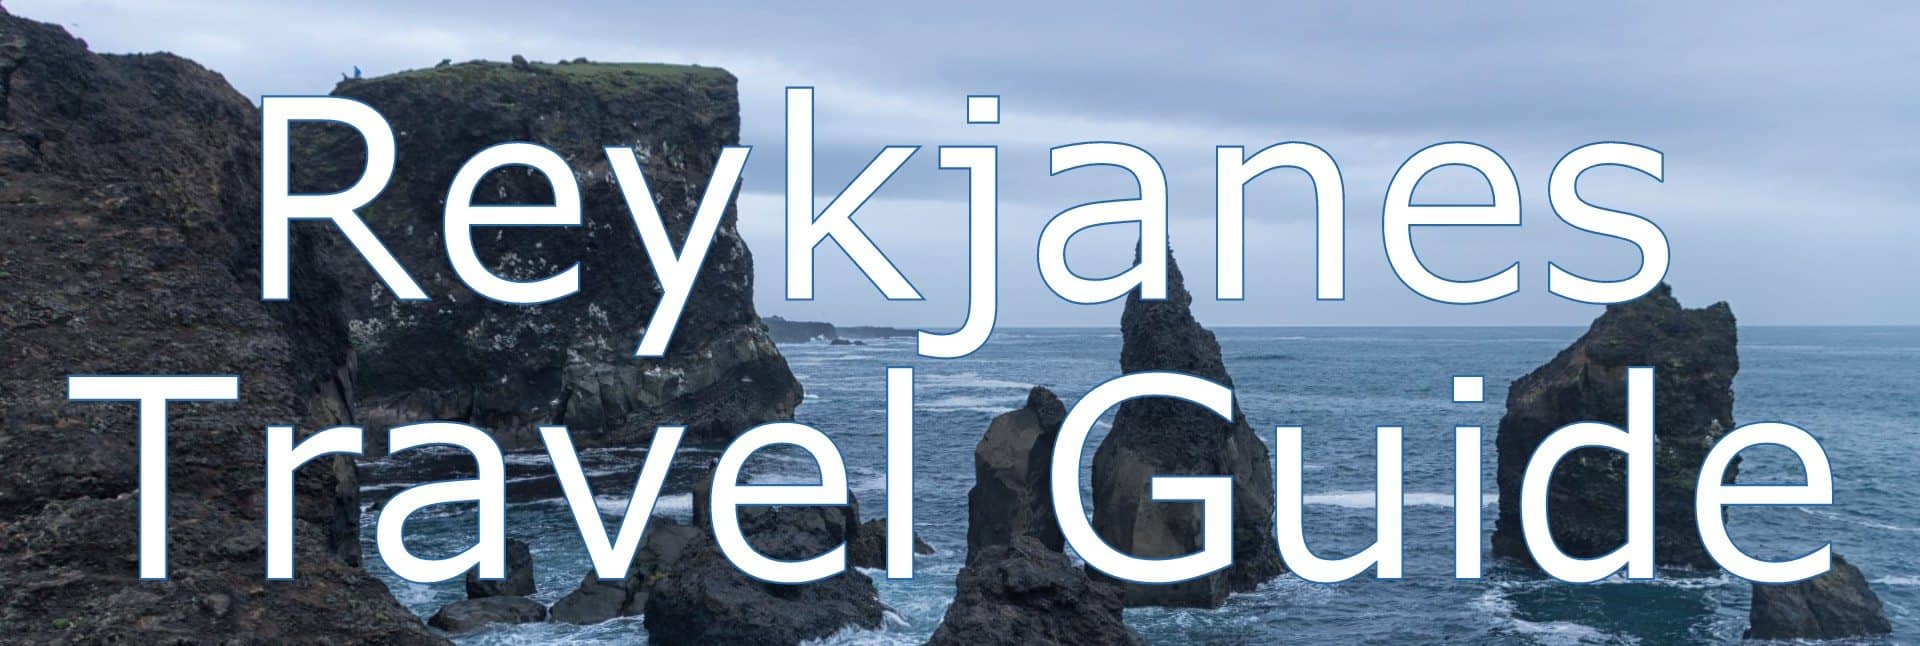 Reykjanes Peninsula Travel Guide